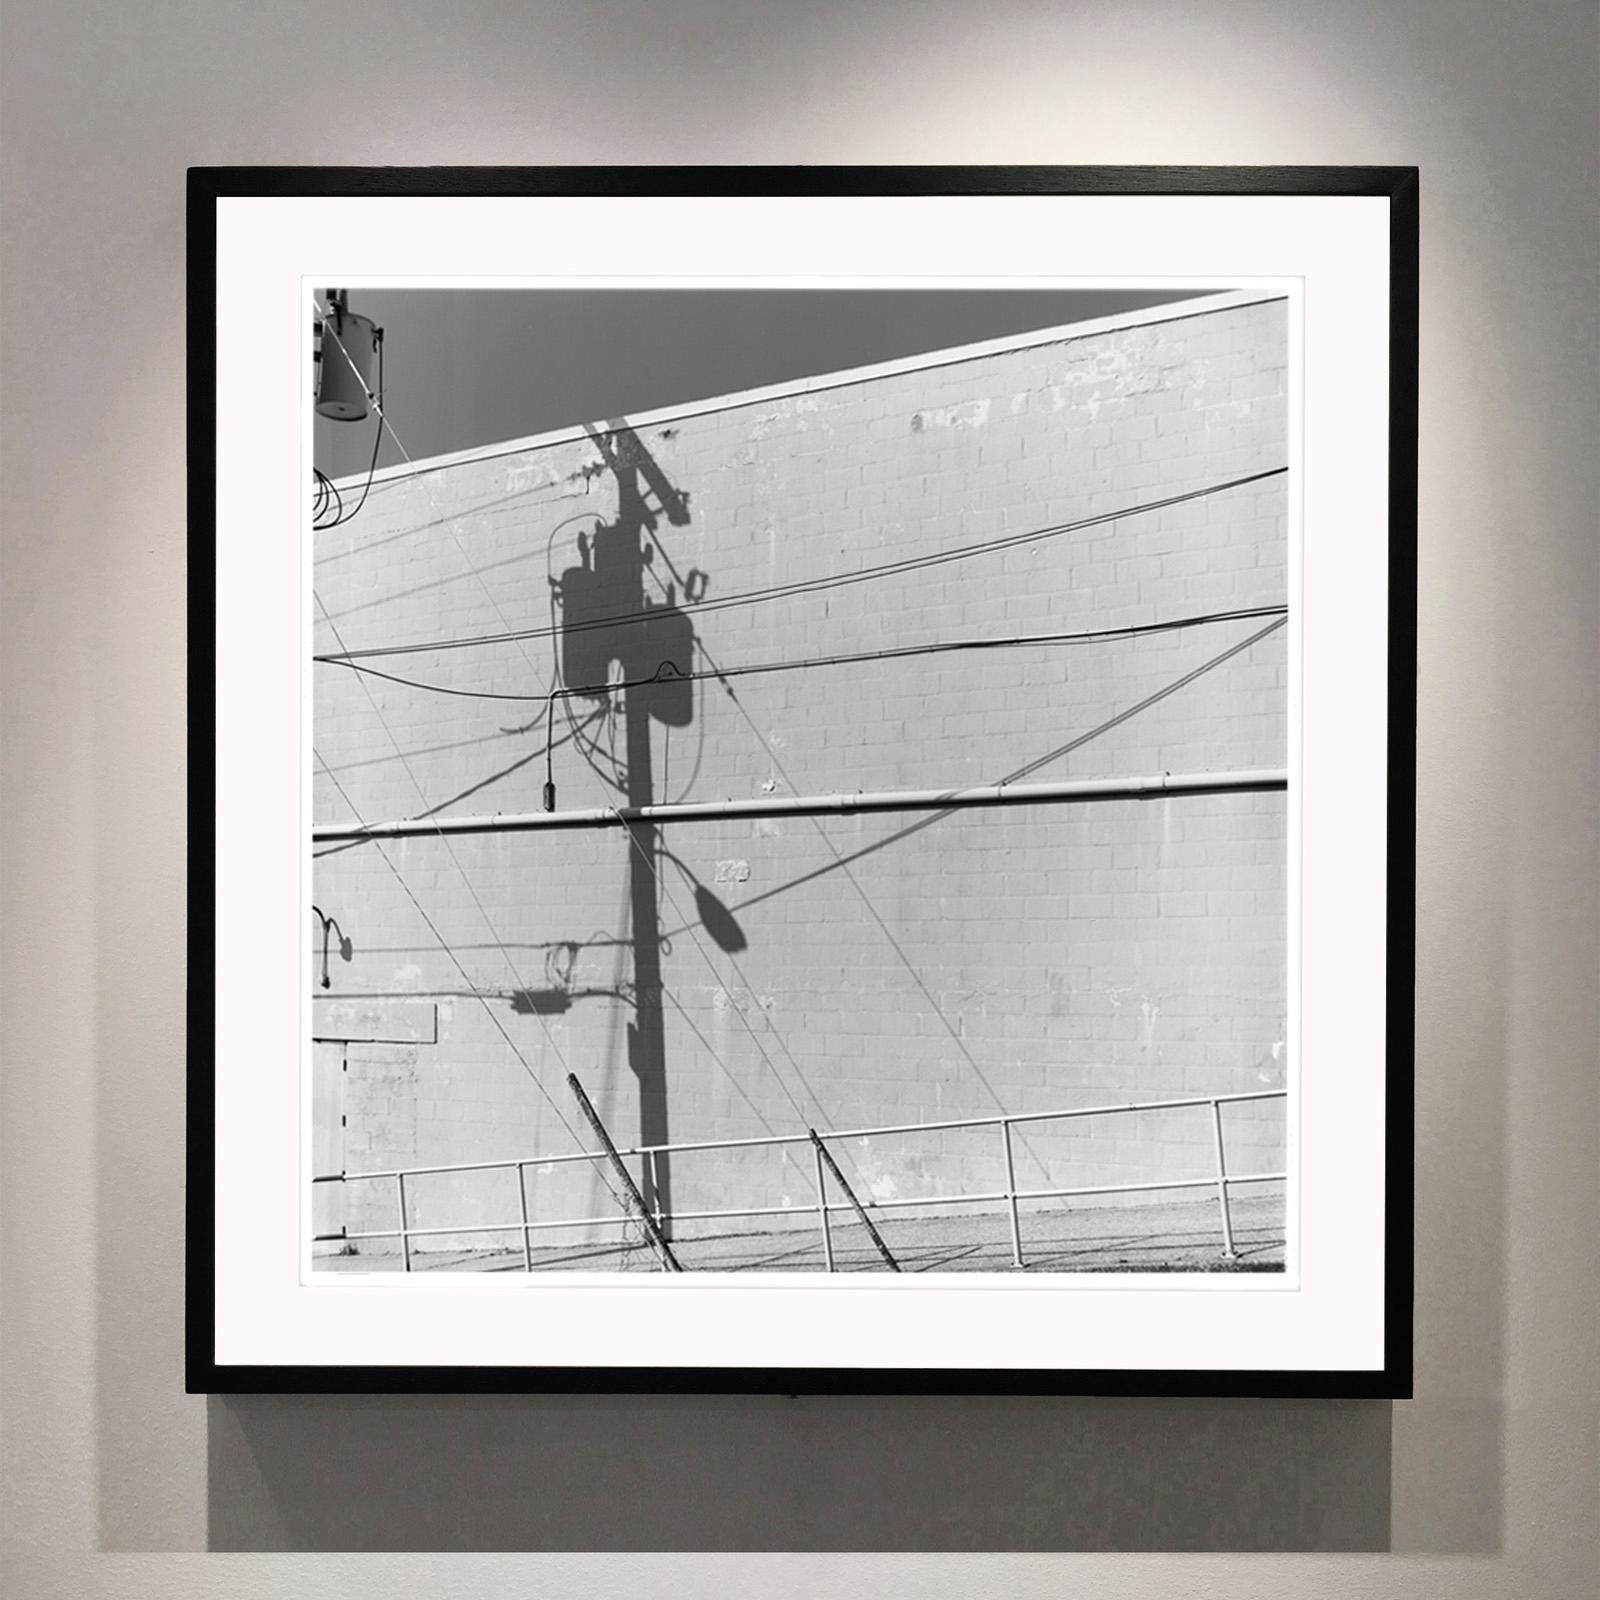 Shadow Lines, Wildwood, New Jersey – amerikanische quadratische Fotografie in Schwarz-Weiß – Photograph von Richard Heeps